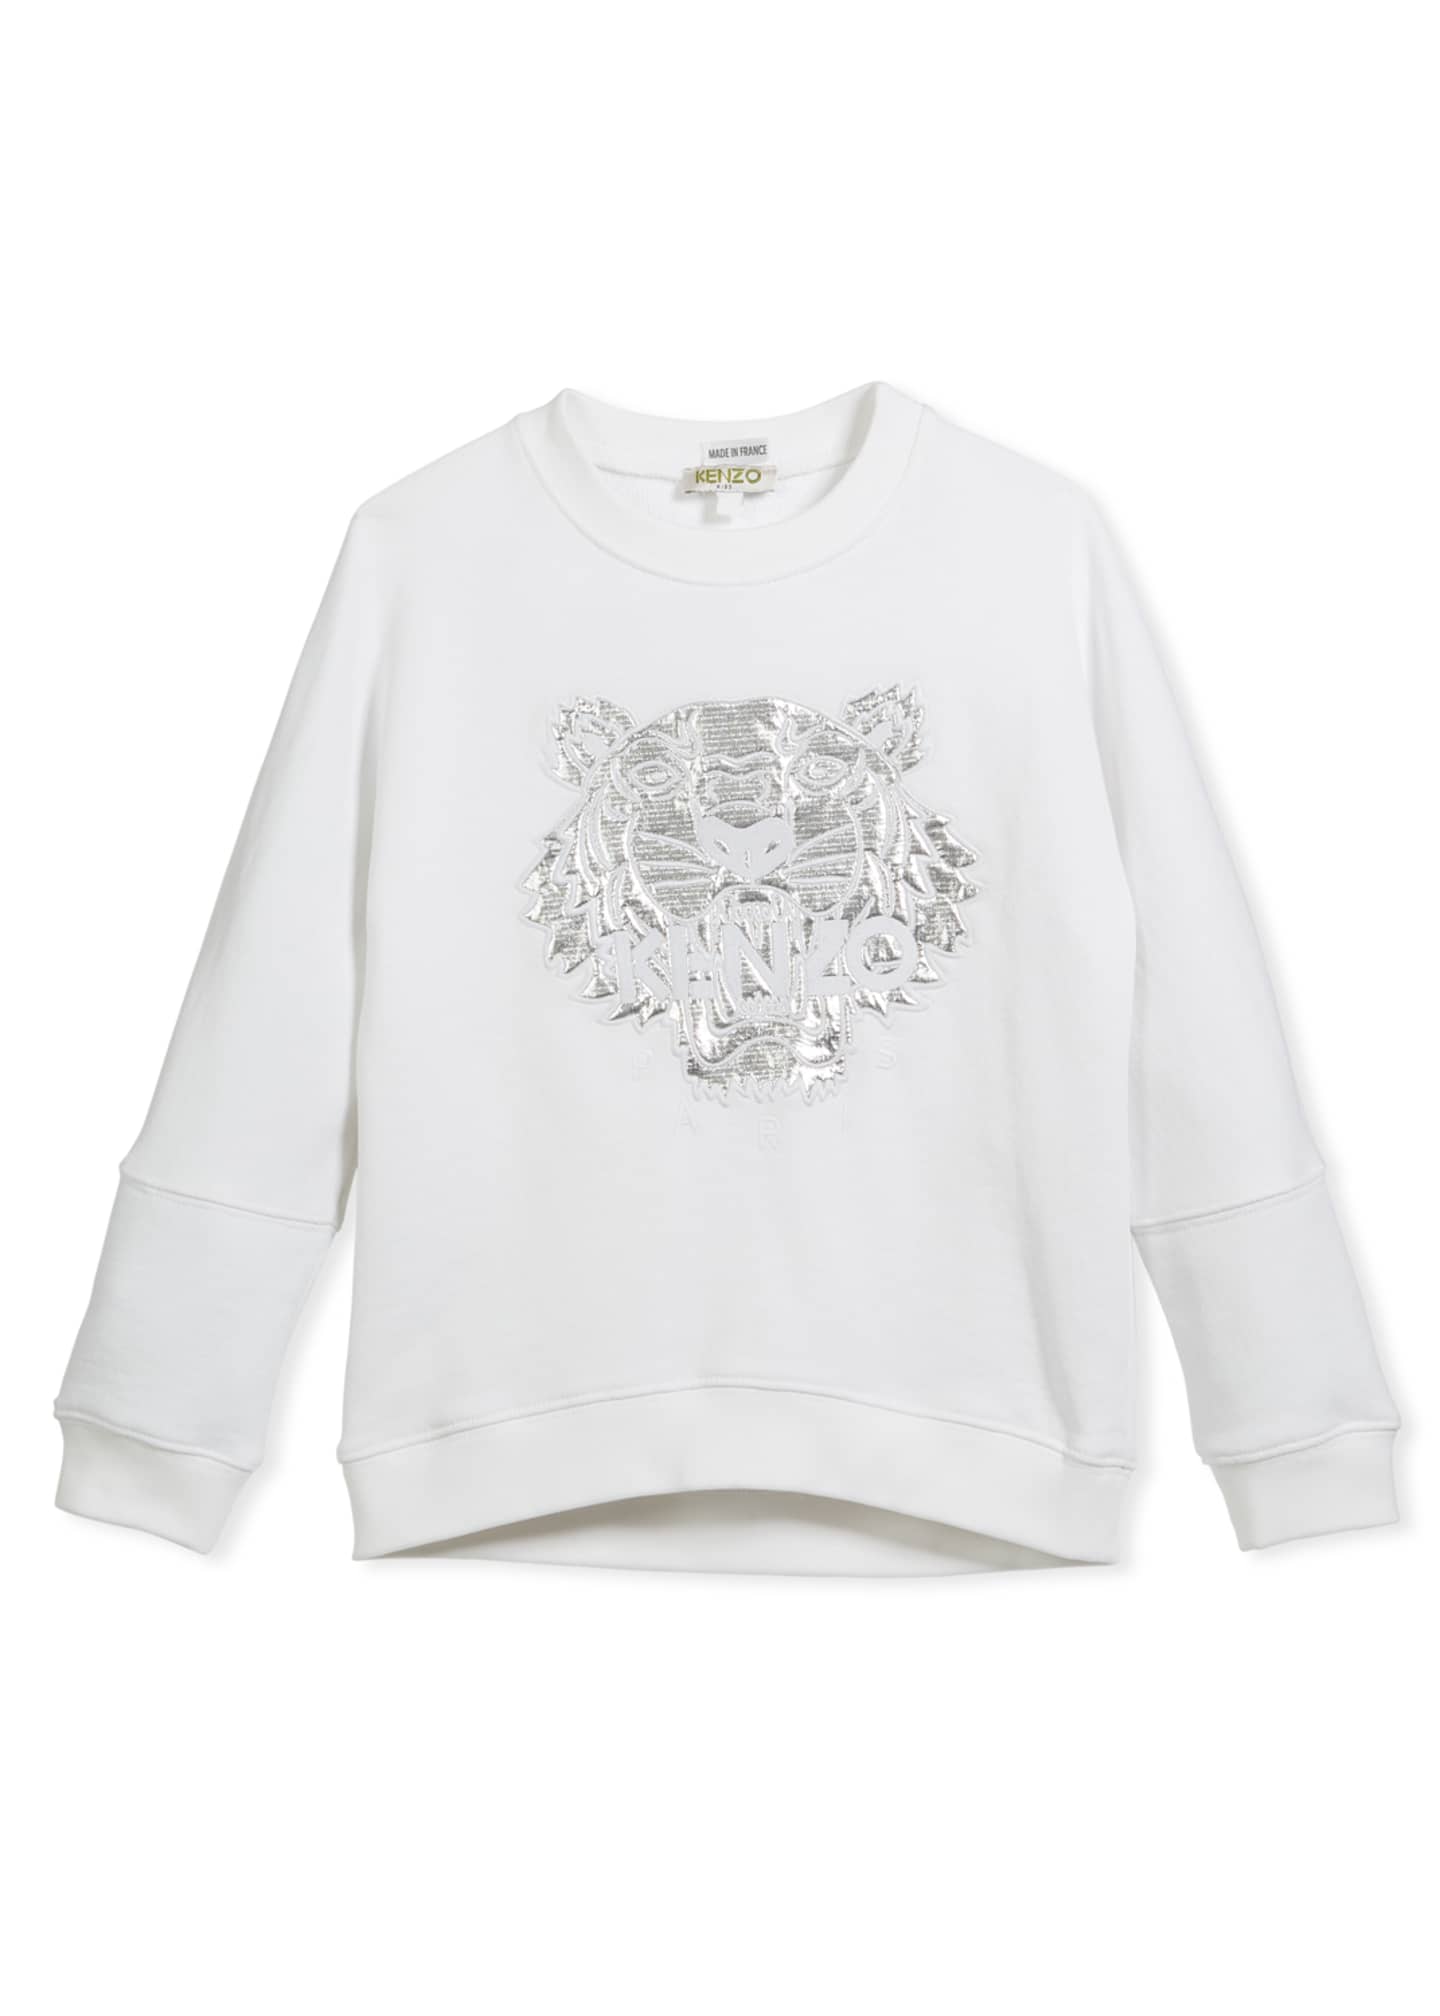 kenzo silver tiger sweatshirt